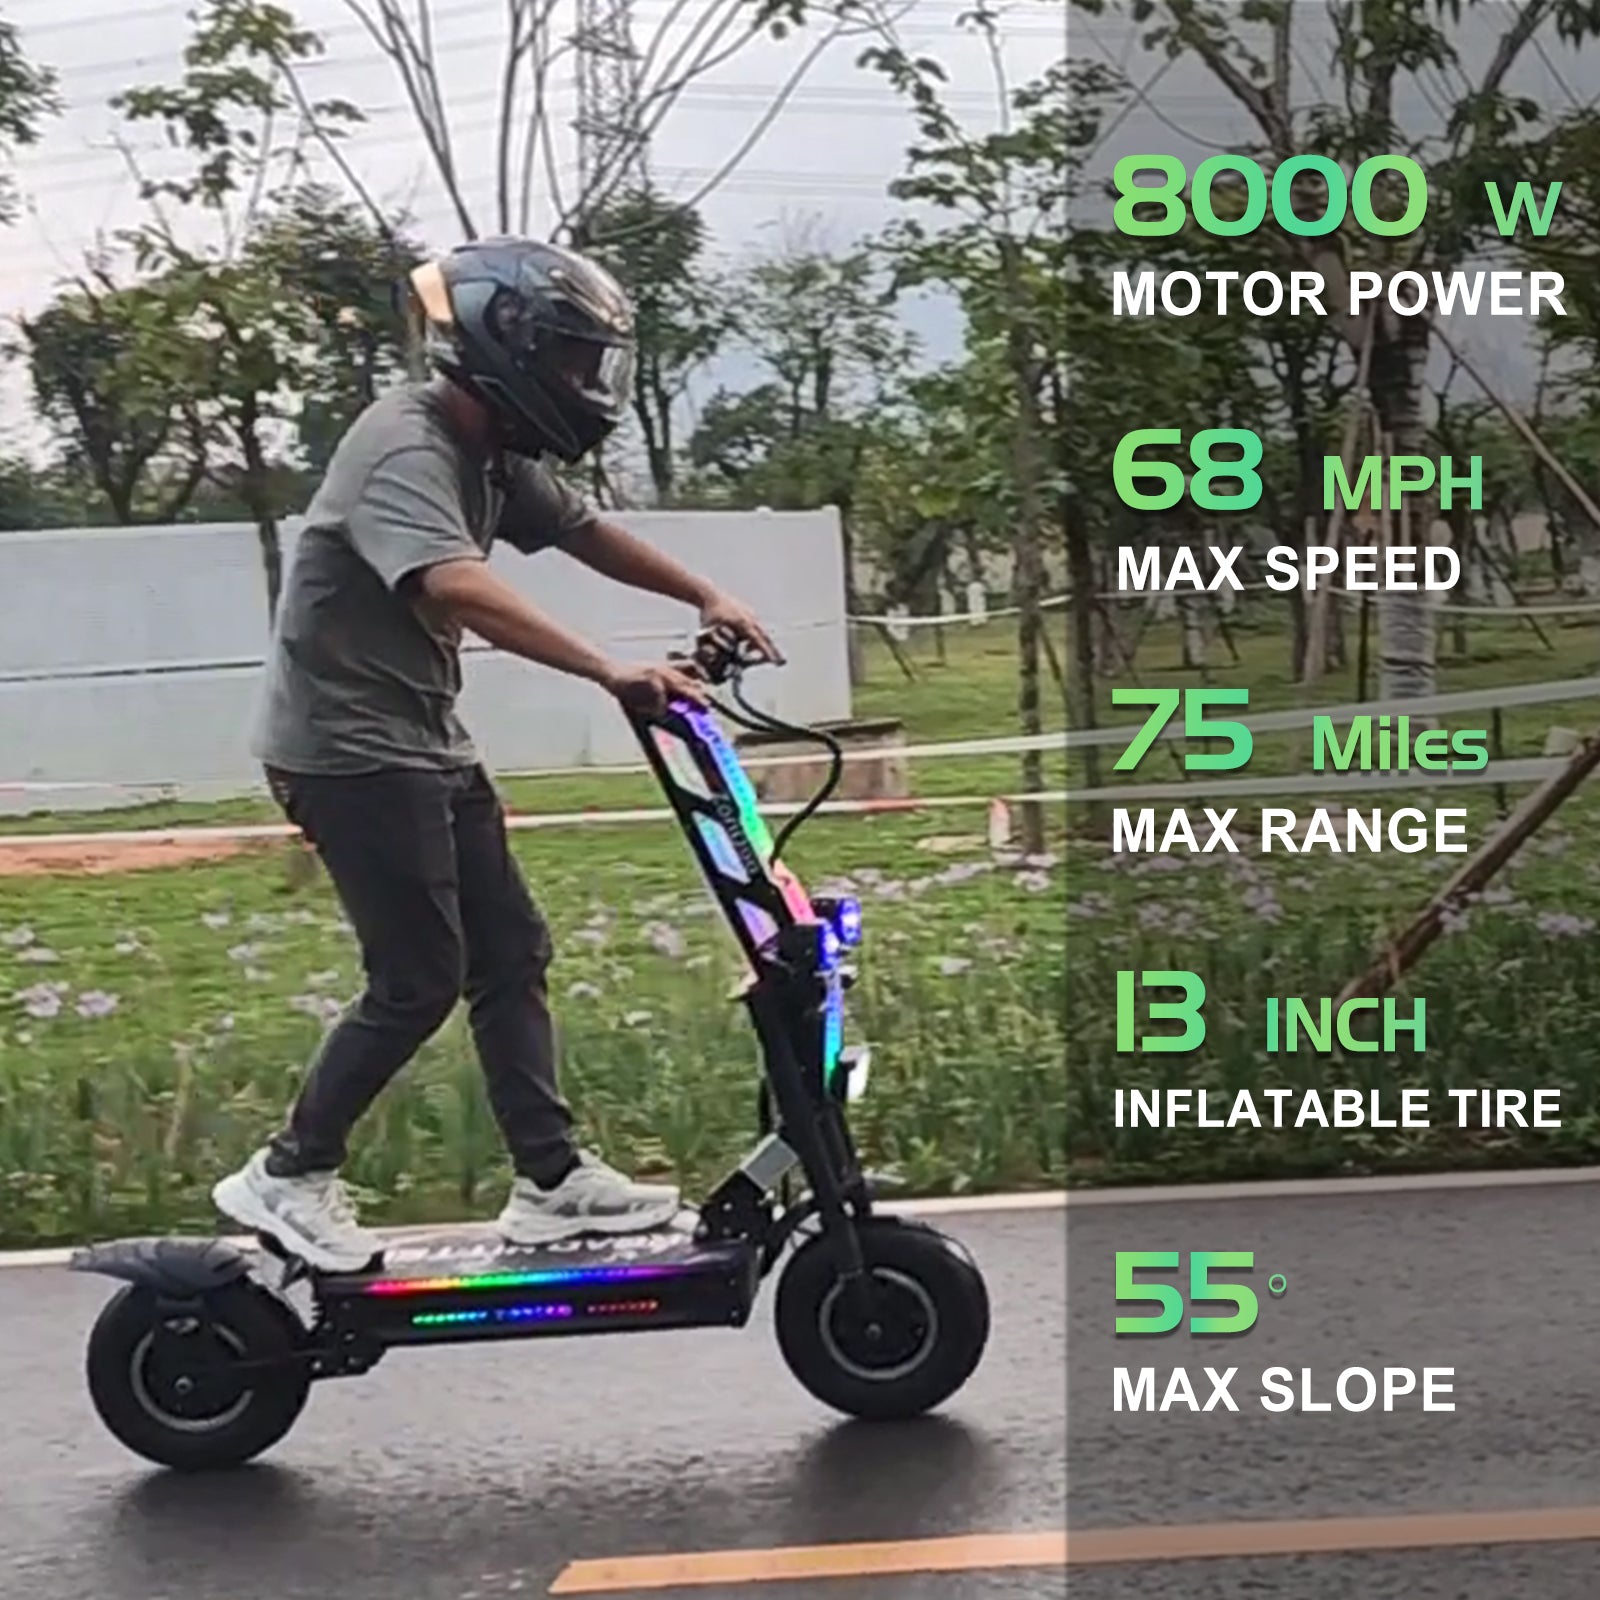 8000w electric scooter can do EU Dropshipping